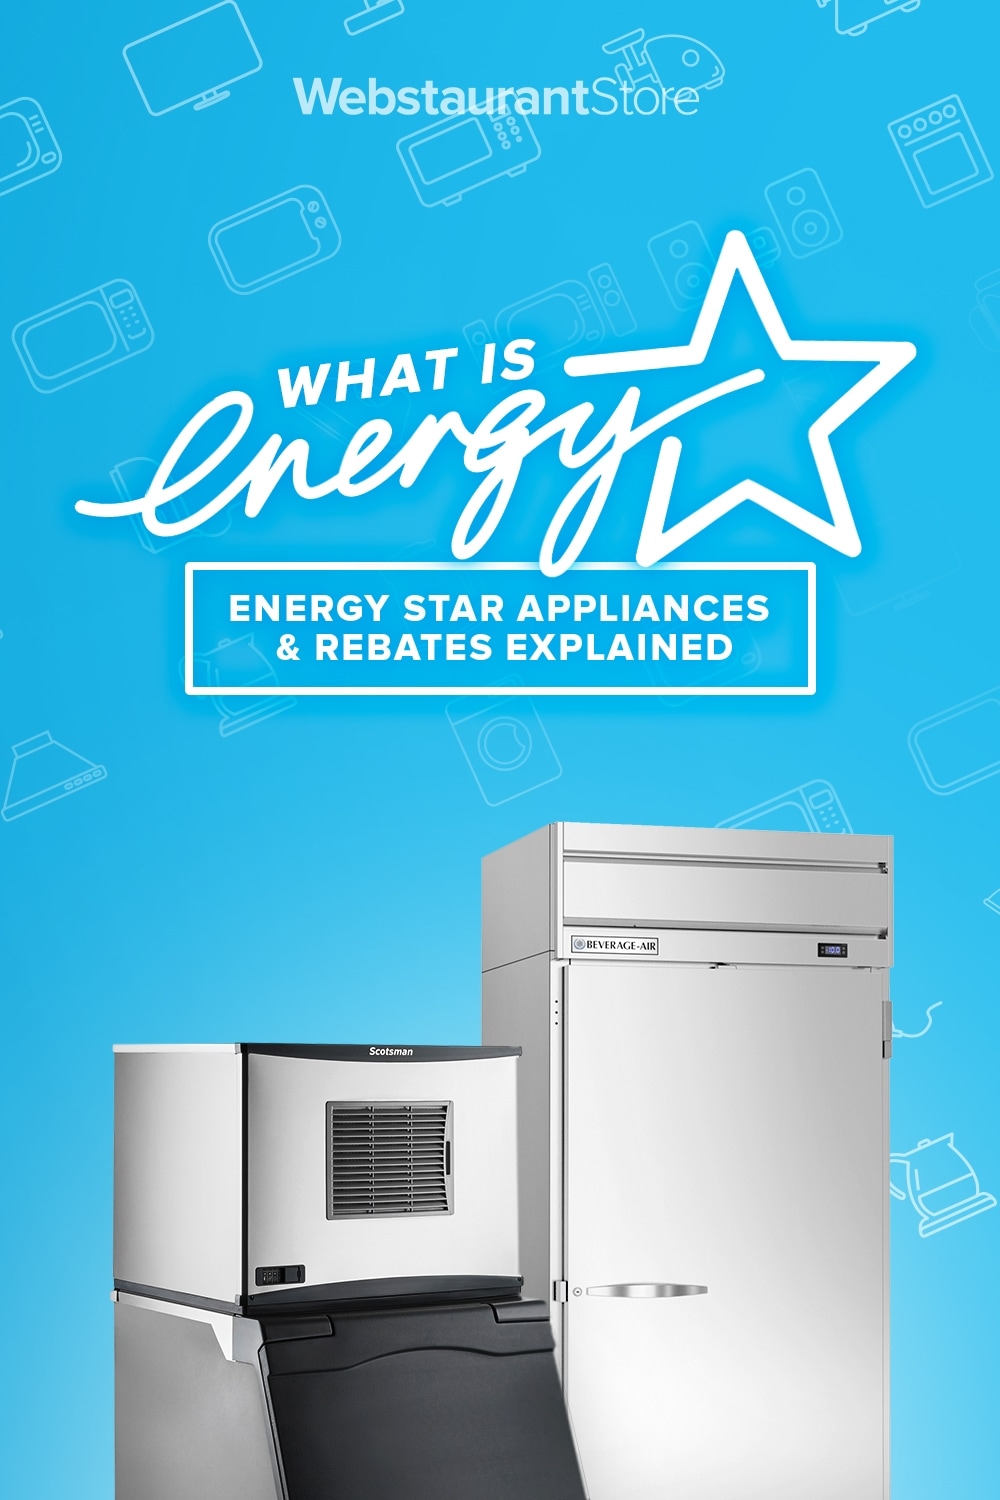 Energy Star Appliances & Rebates Explained!